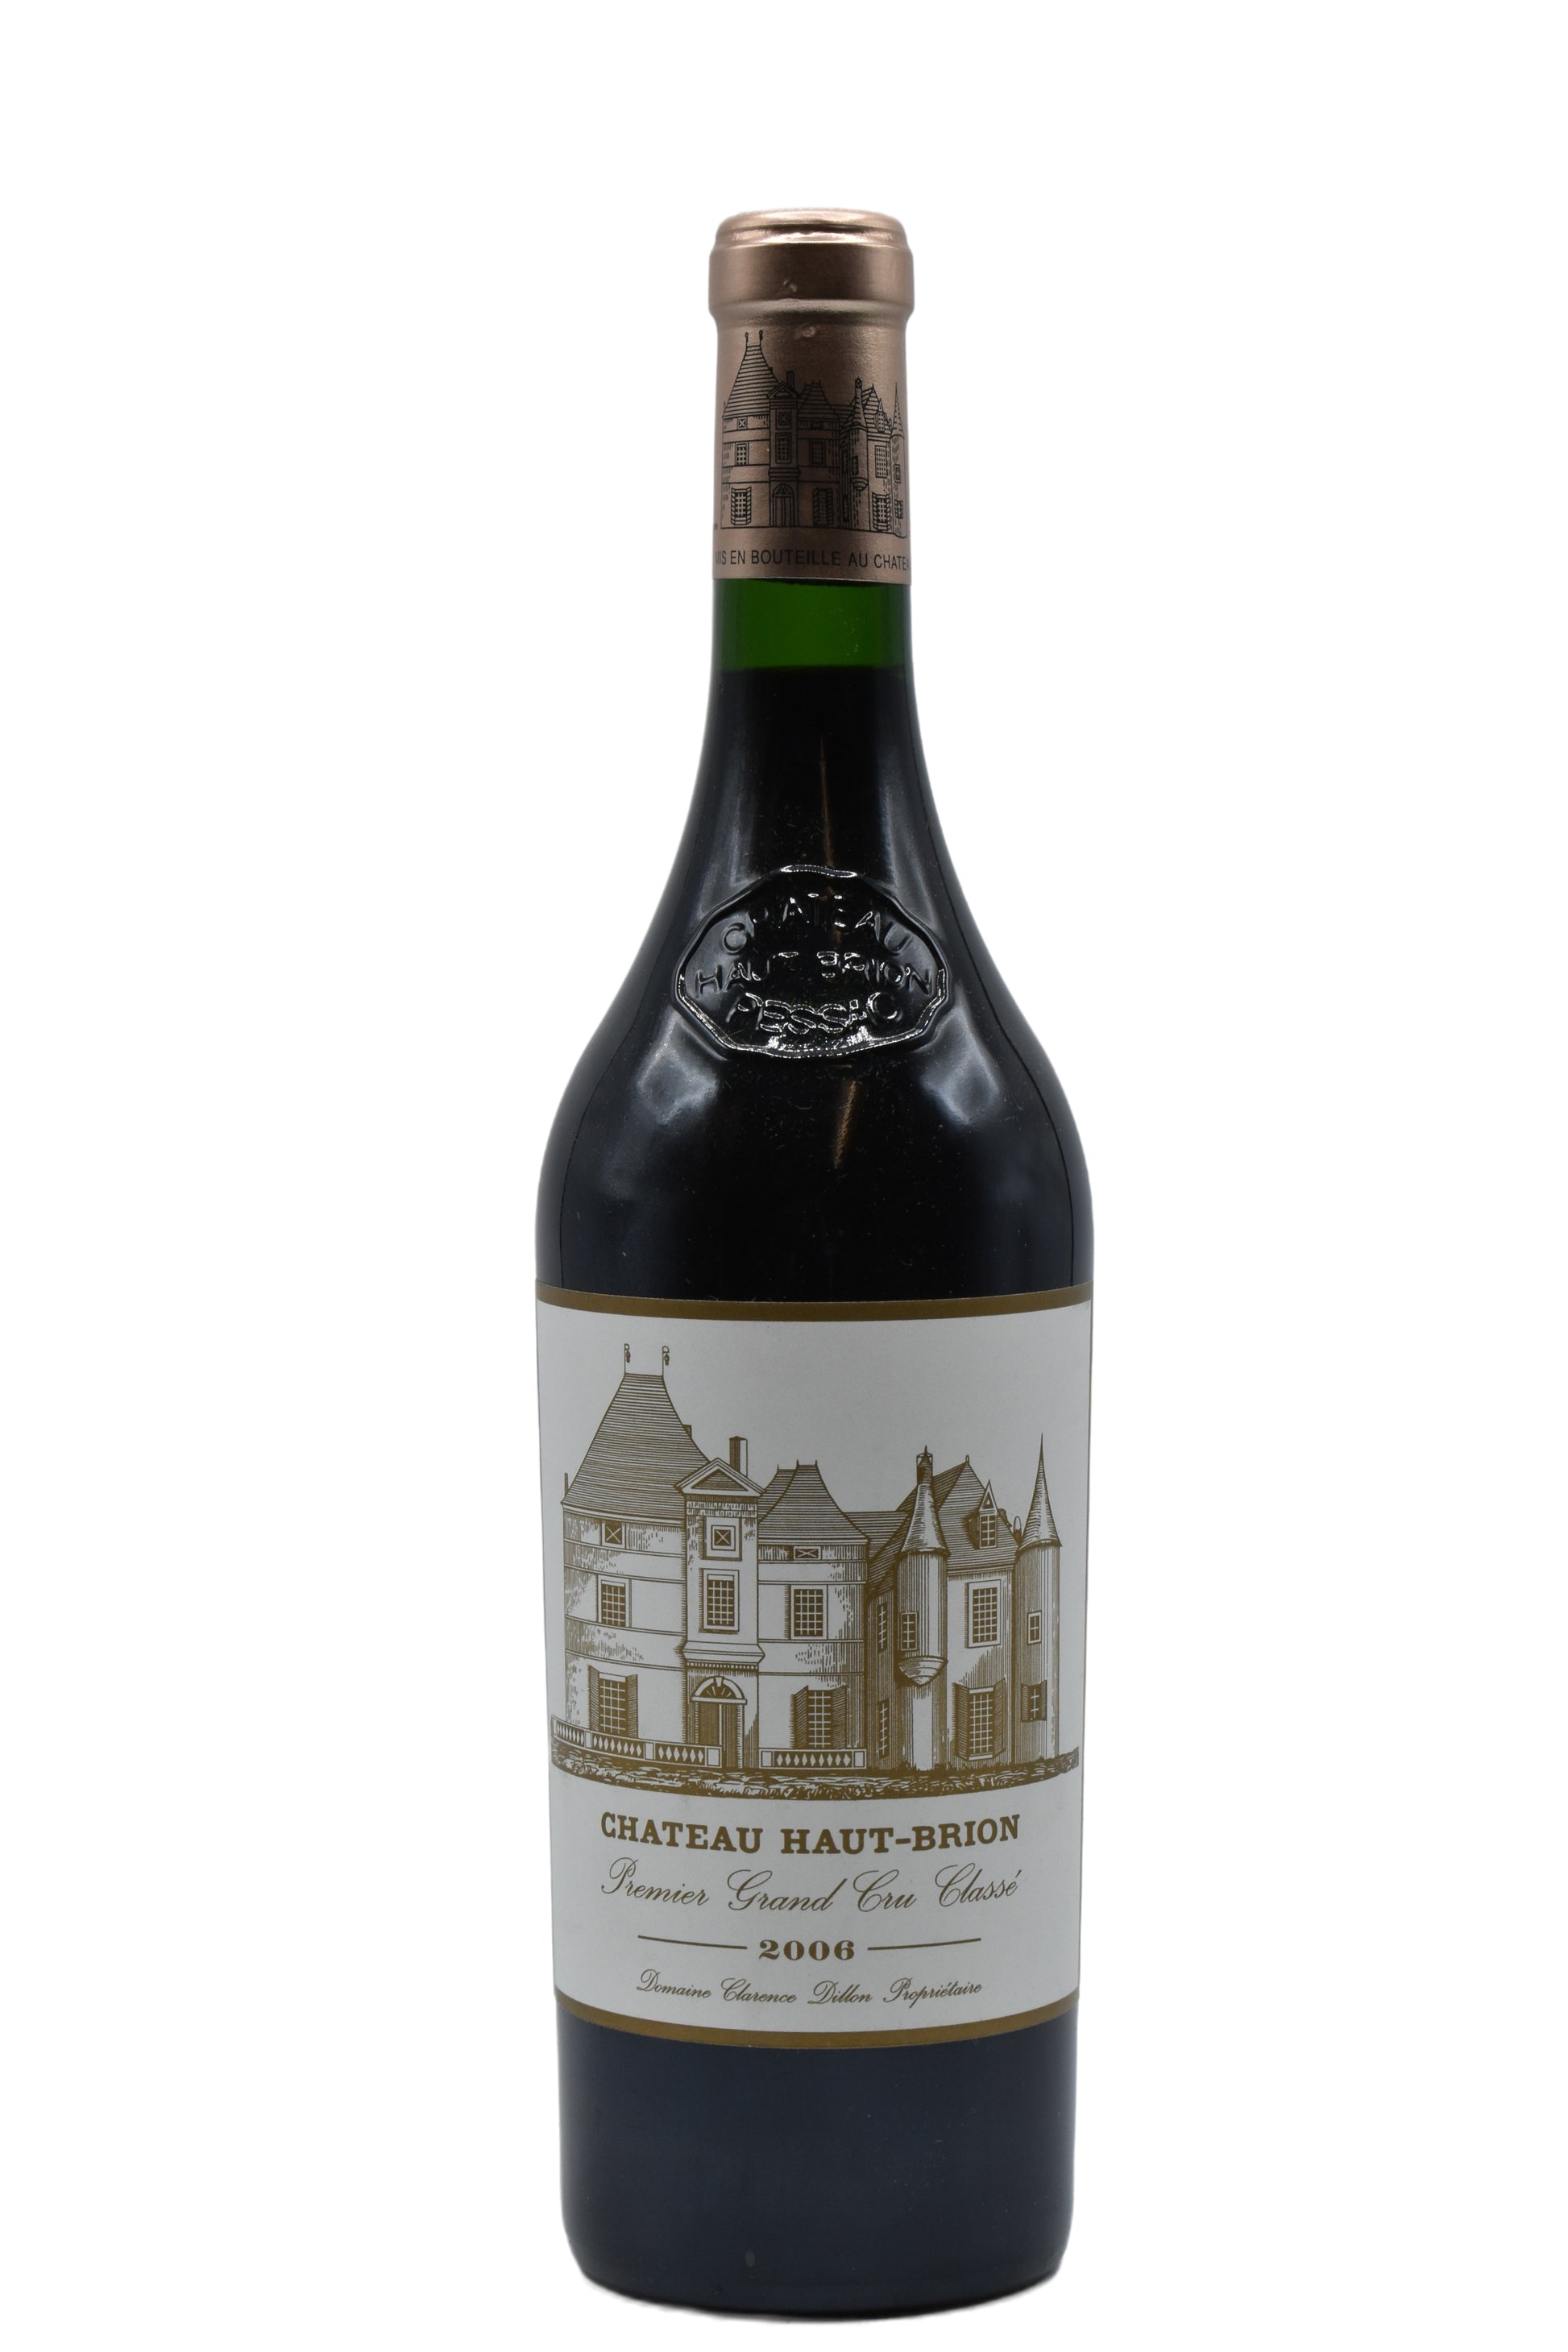 2006 Chateau Haut-Brion 750ml - Walker Wine Co.